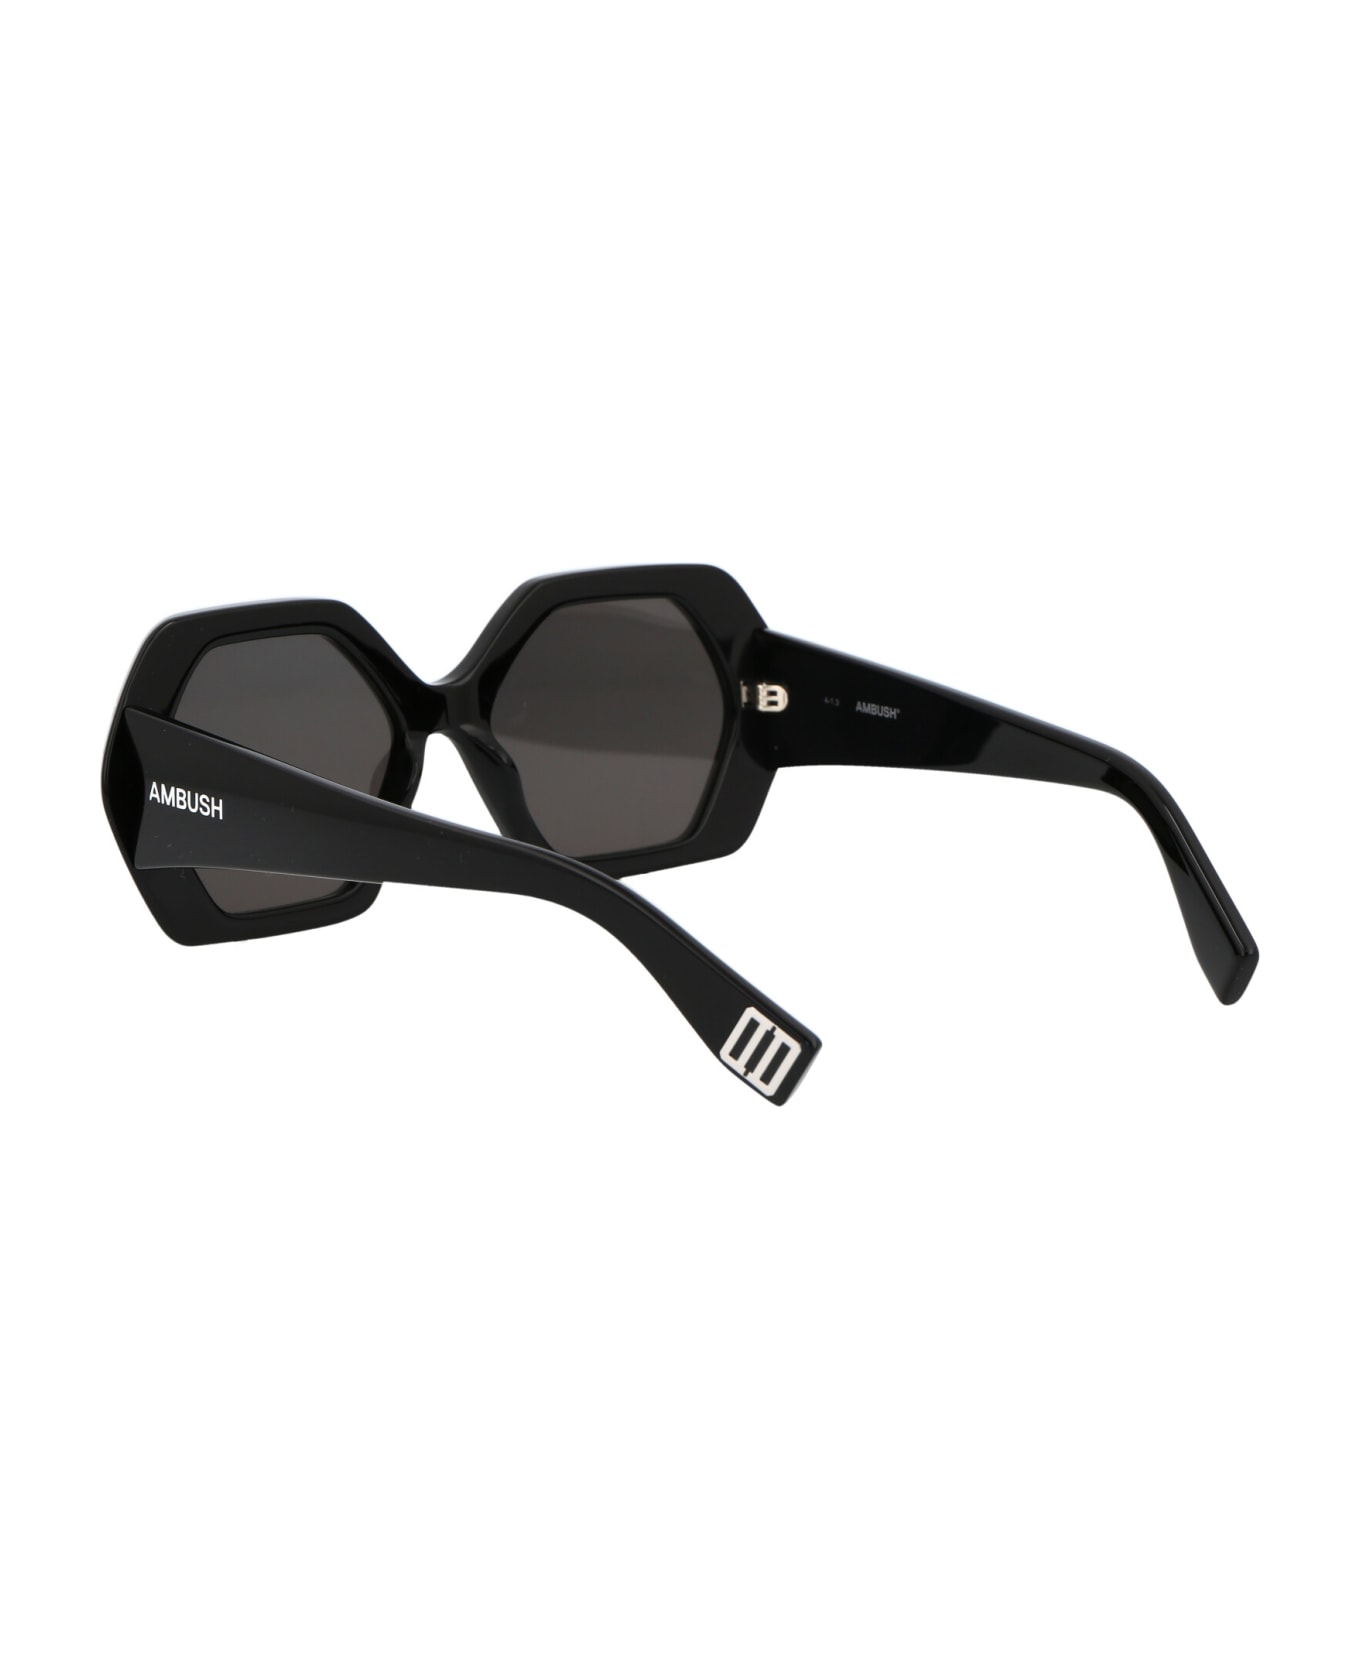 AMBUSH Eirene Sunglasses - 1007 BLACK DARK GREY